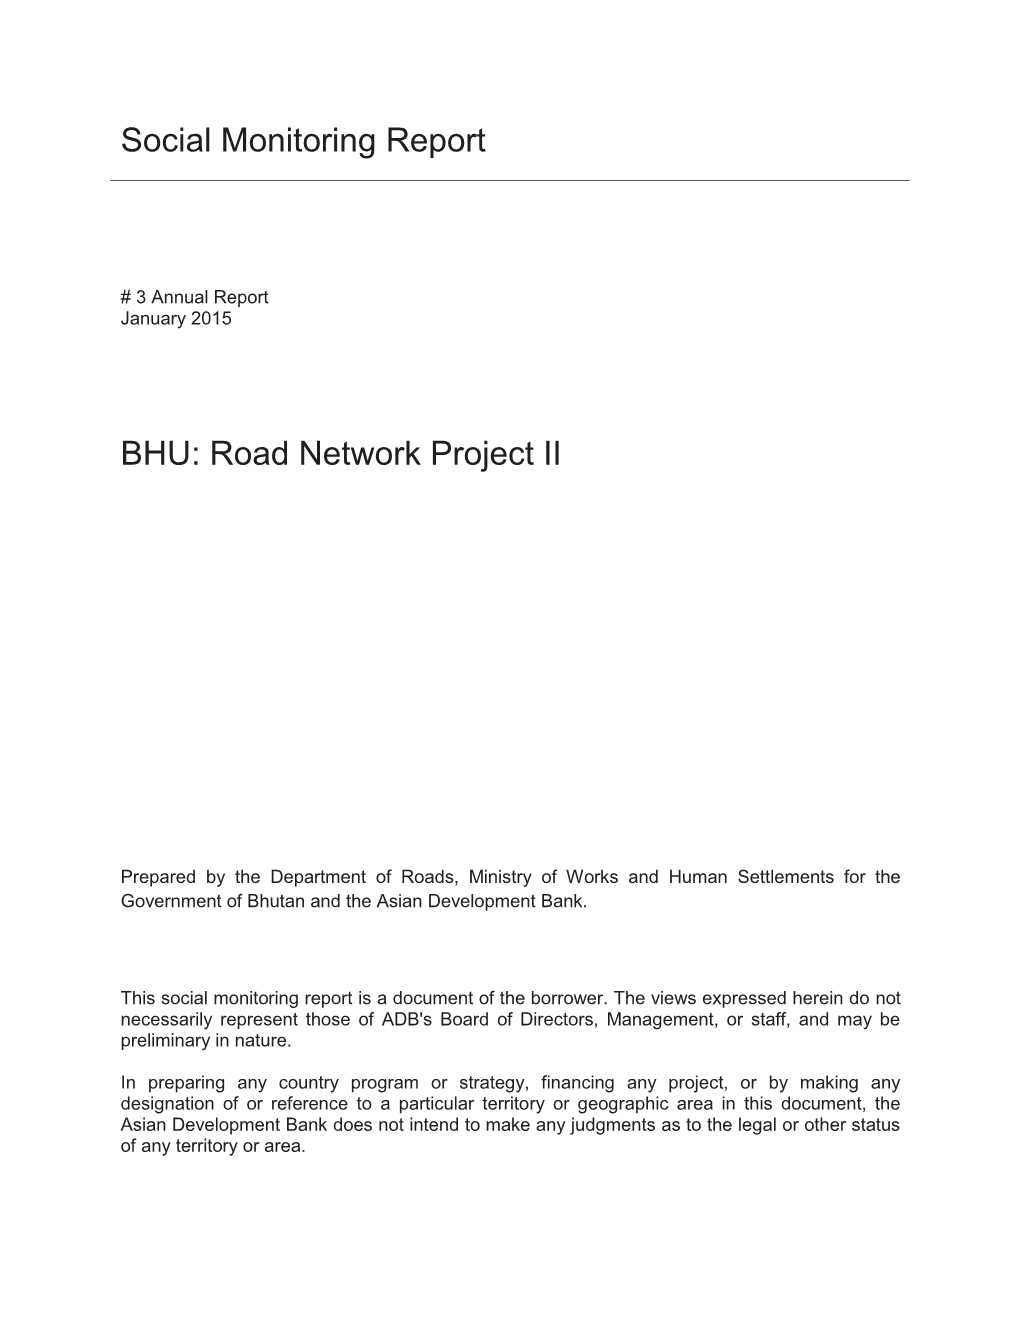 Road Network Project II